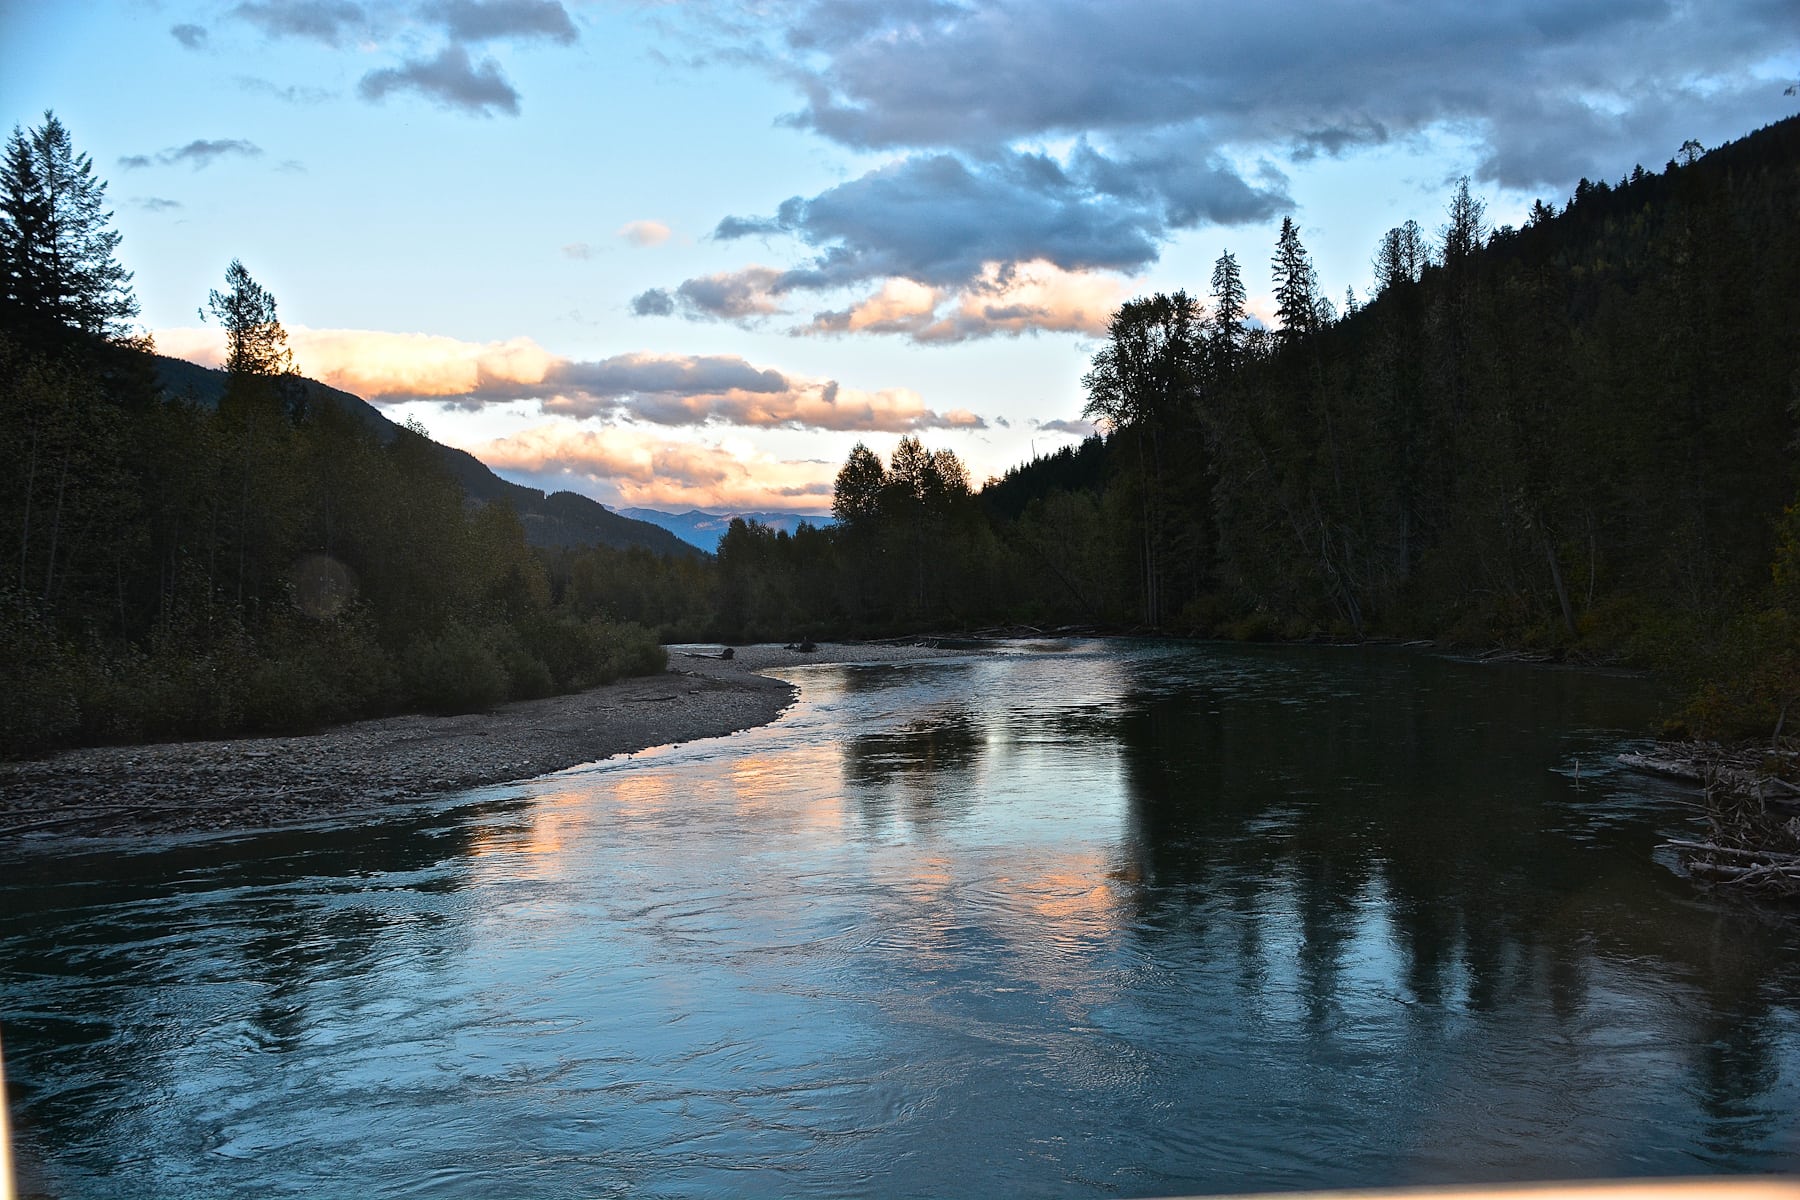 The river at Wild Bear Lodge